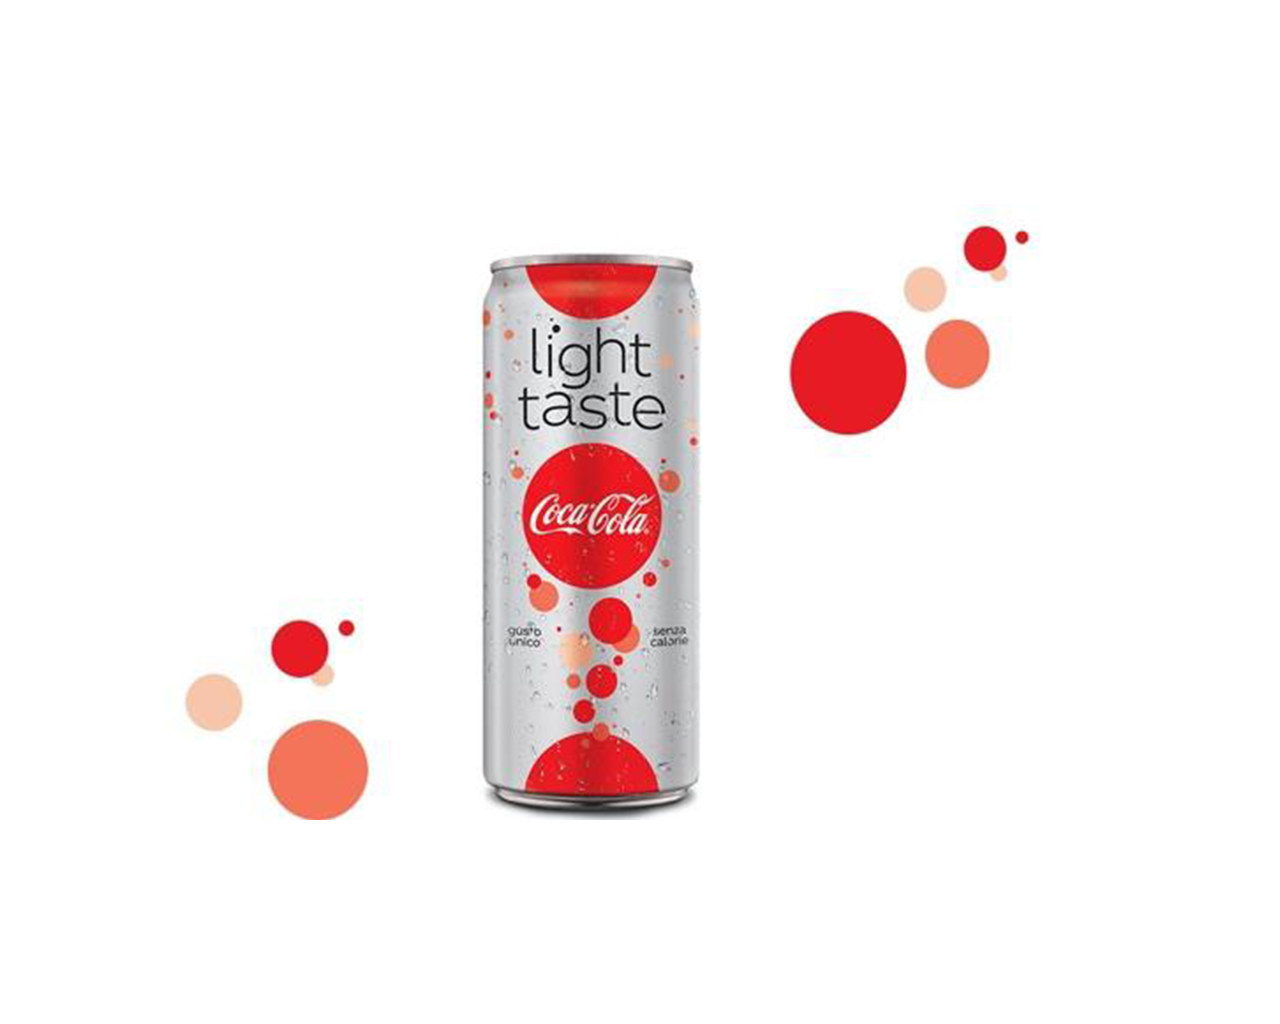 Una lattina di Coca-Cola light taste.